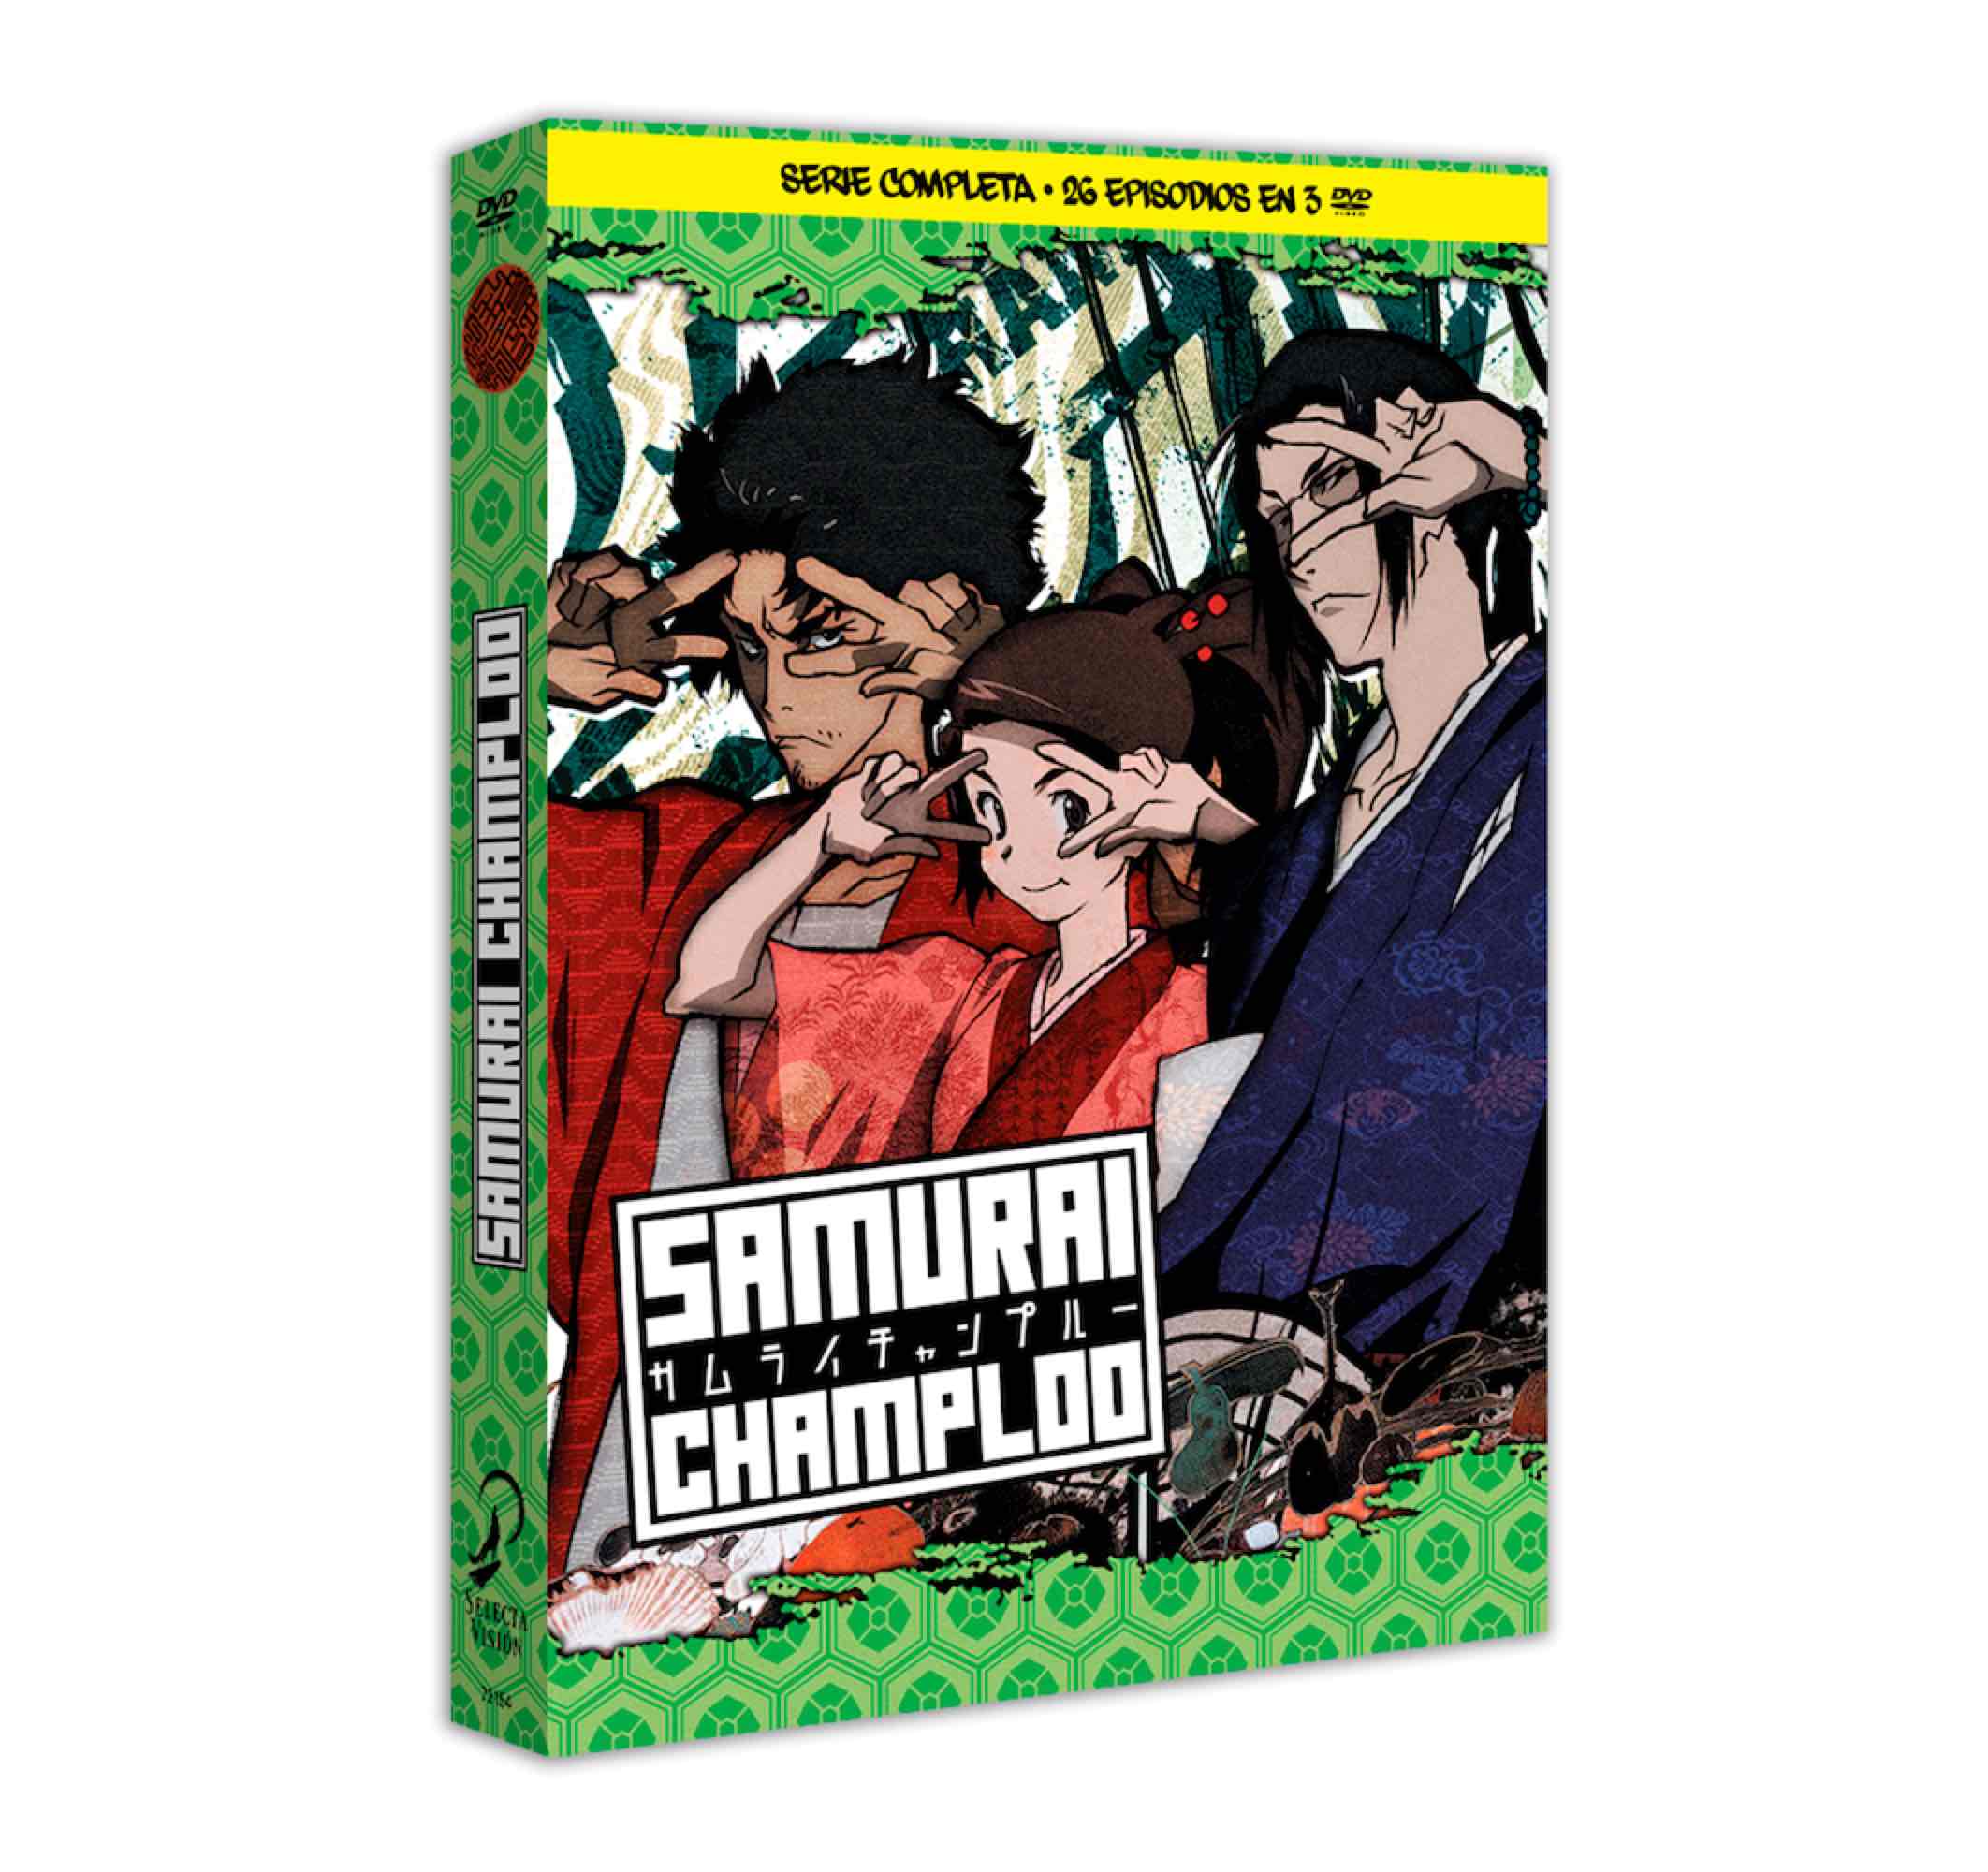 DVD SAMURAI CHAMPLOO SERIE COMPLETA